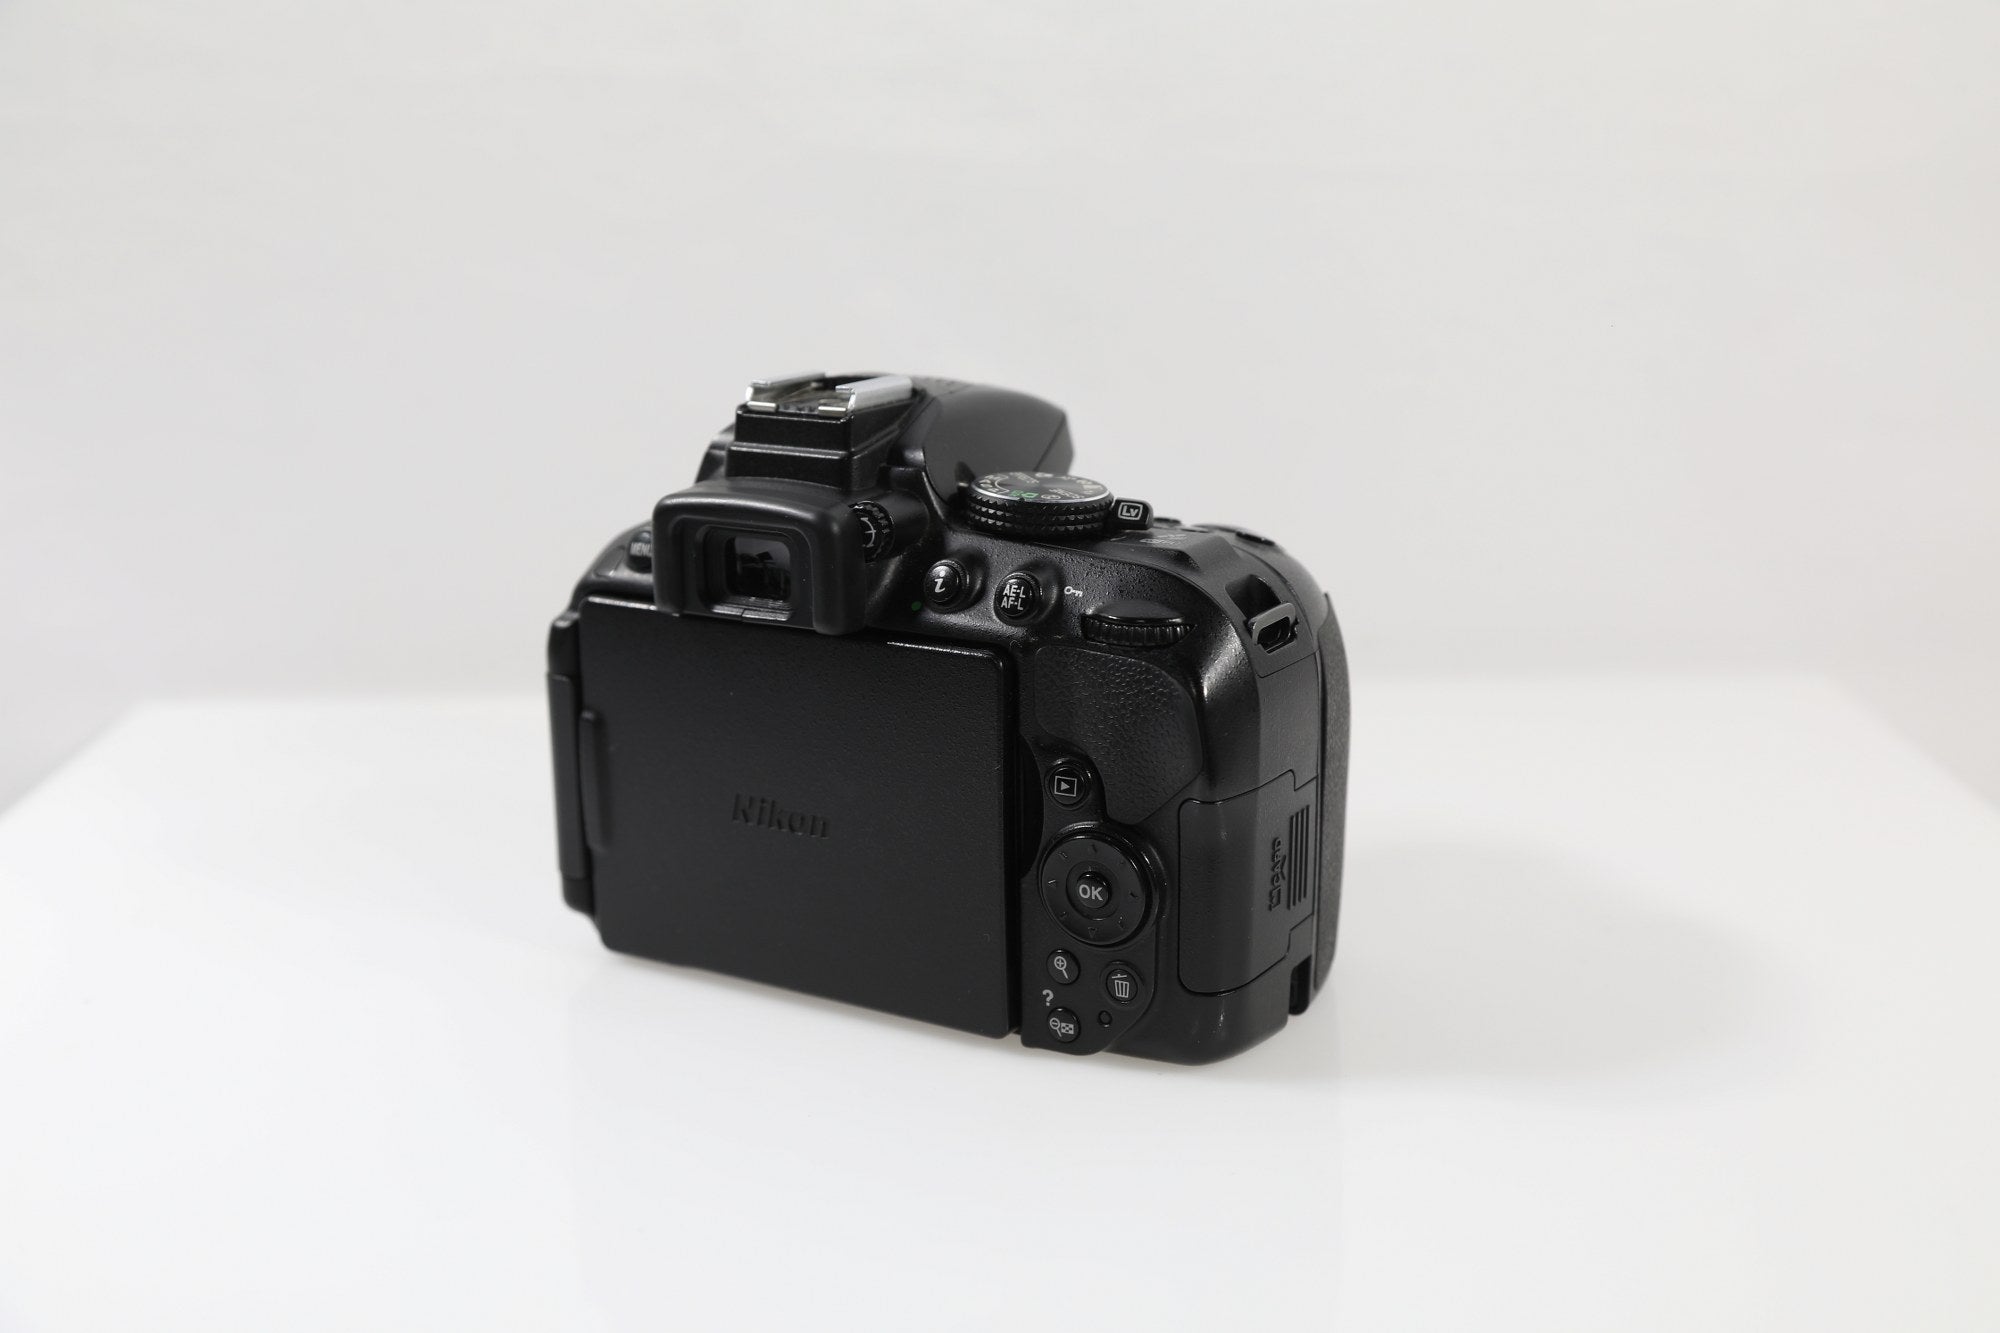 Nikon D5300 Camera - Body